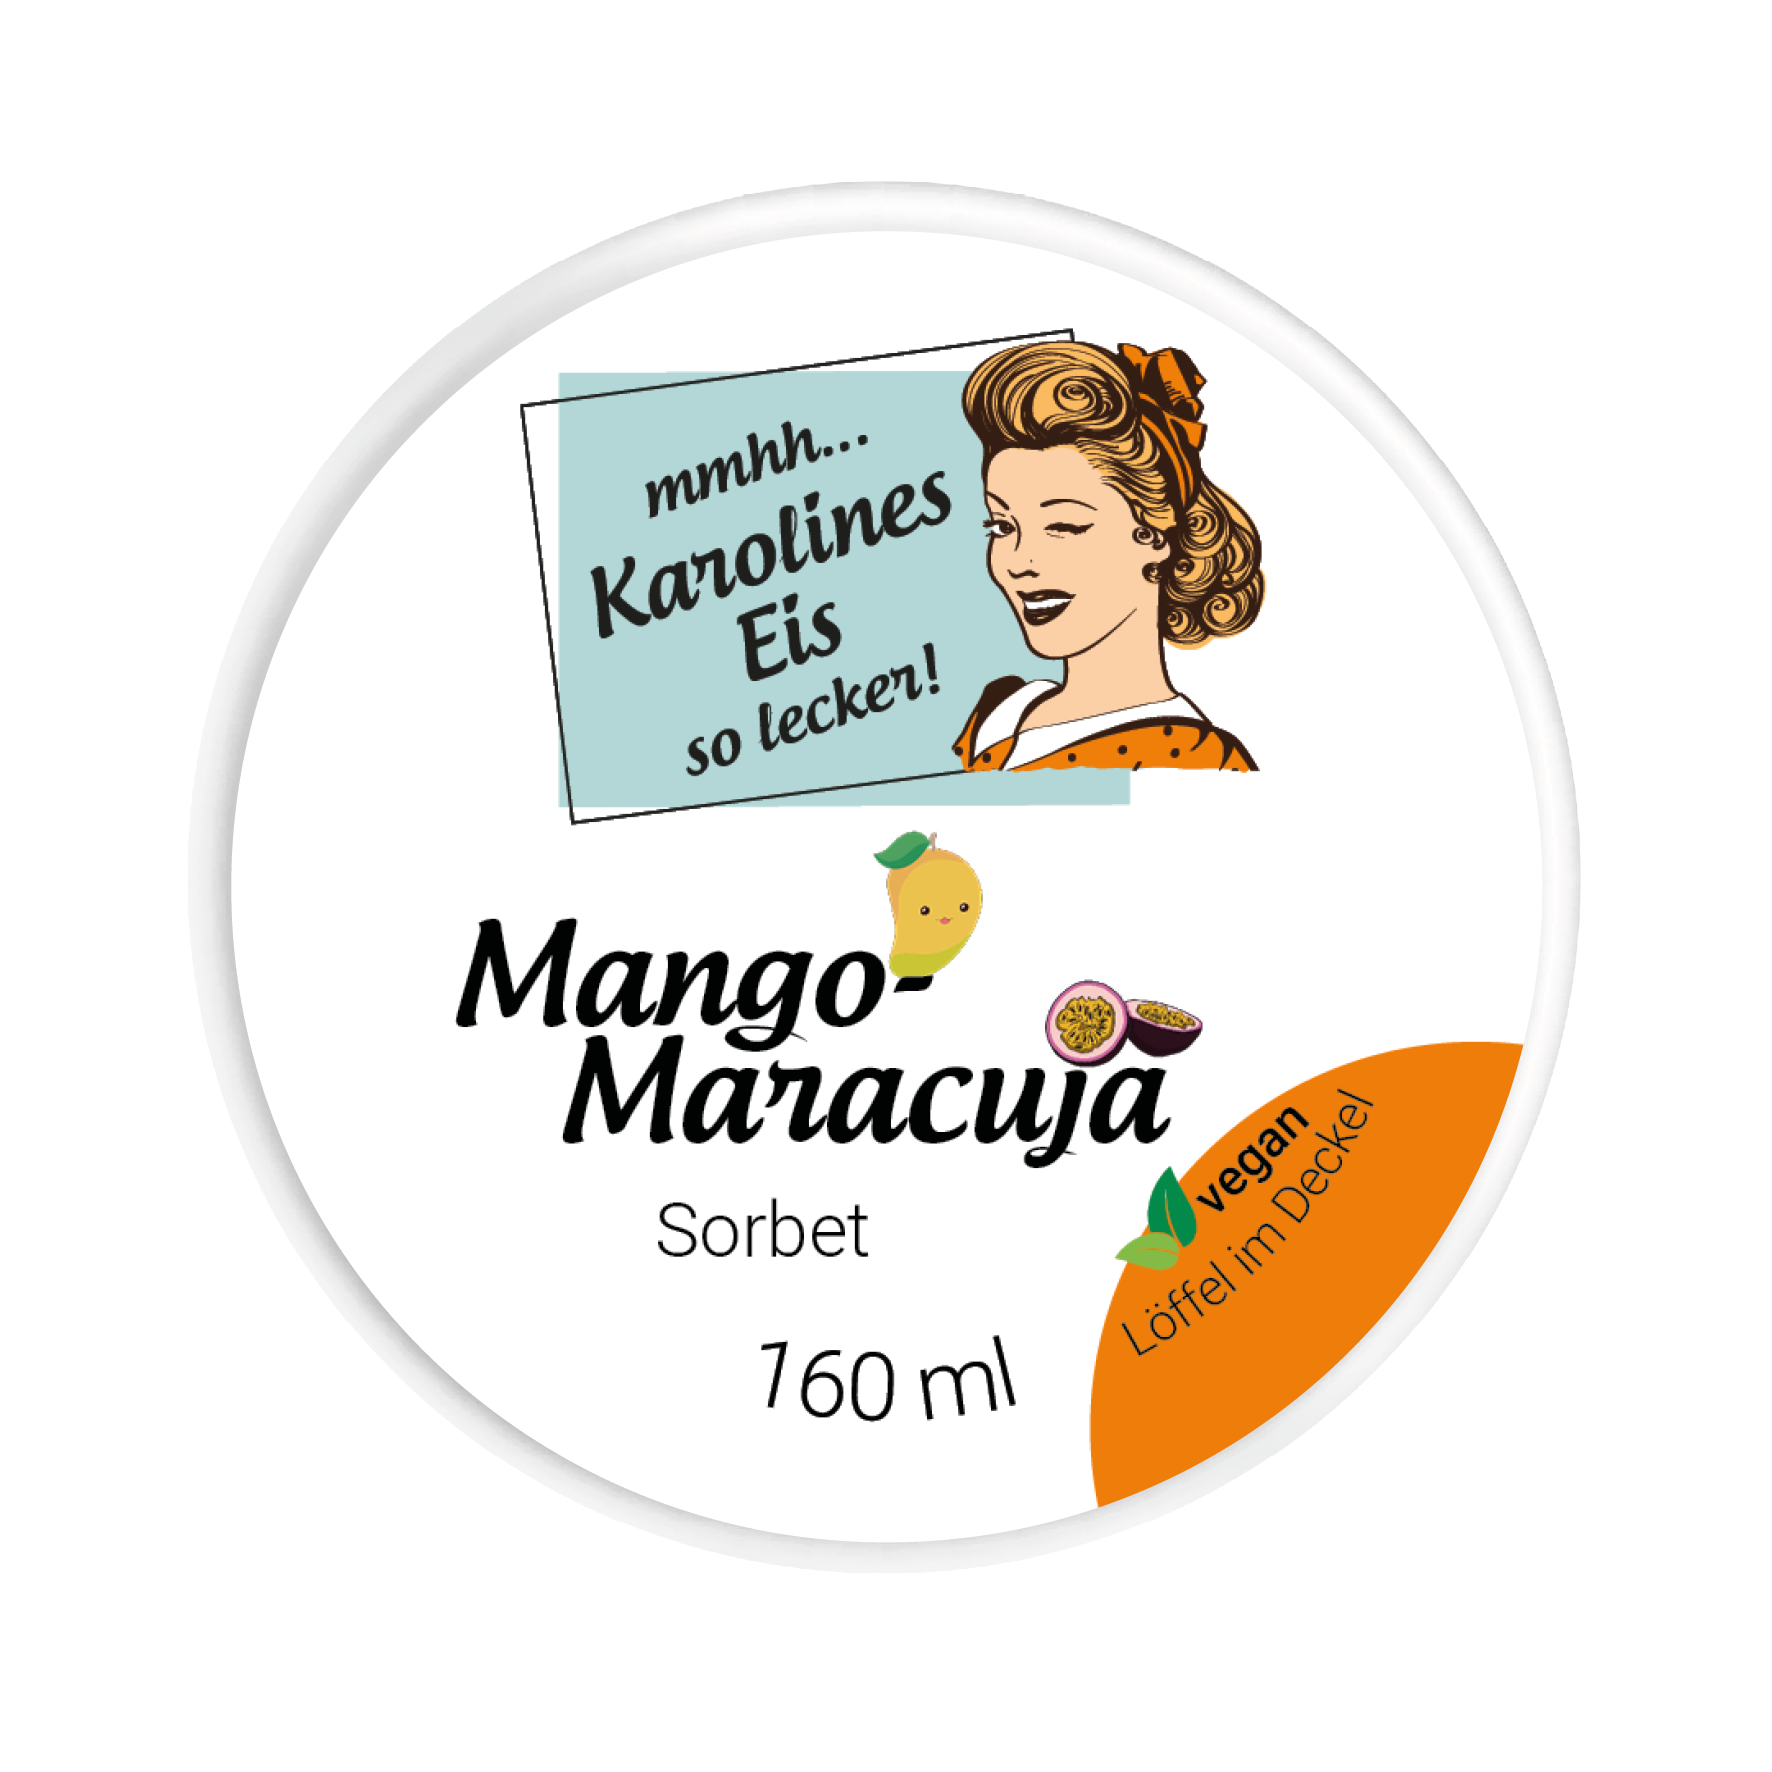 Mango-Maracuja